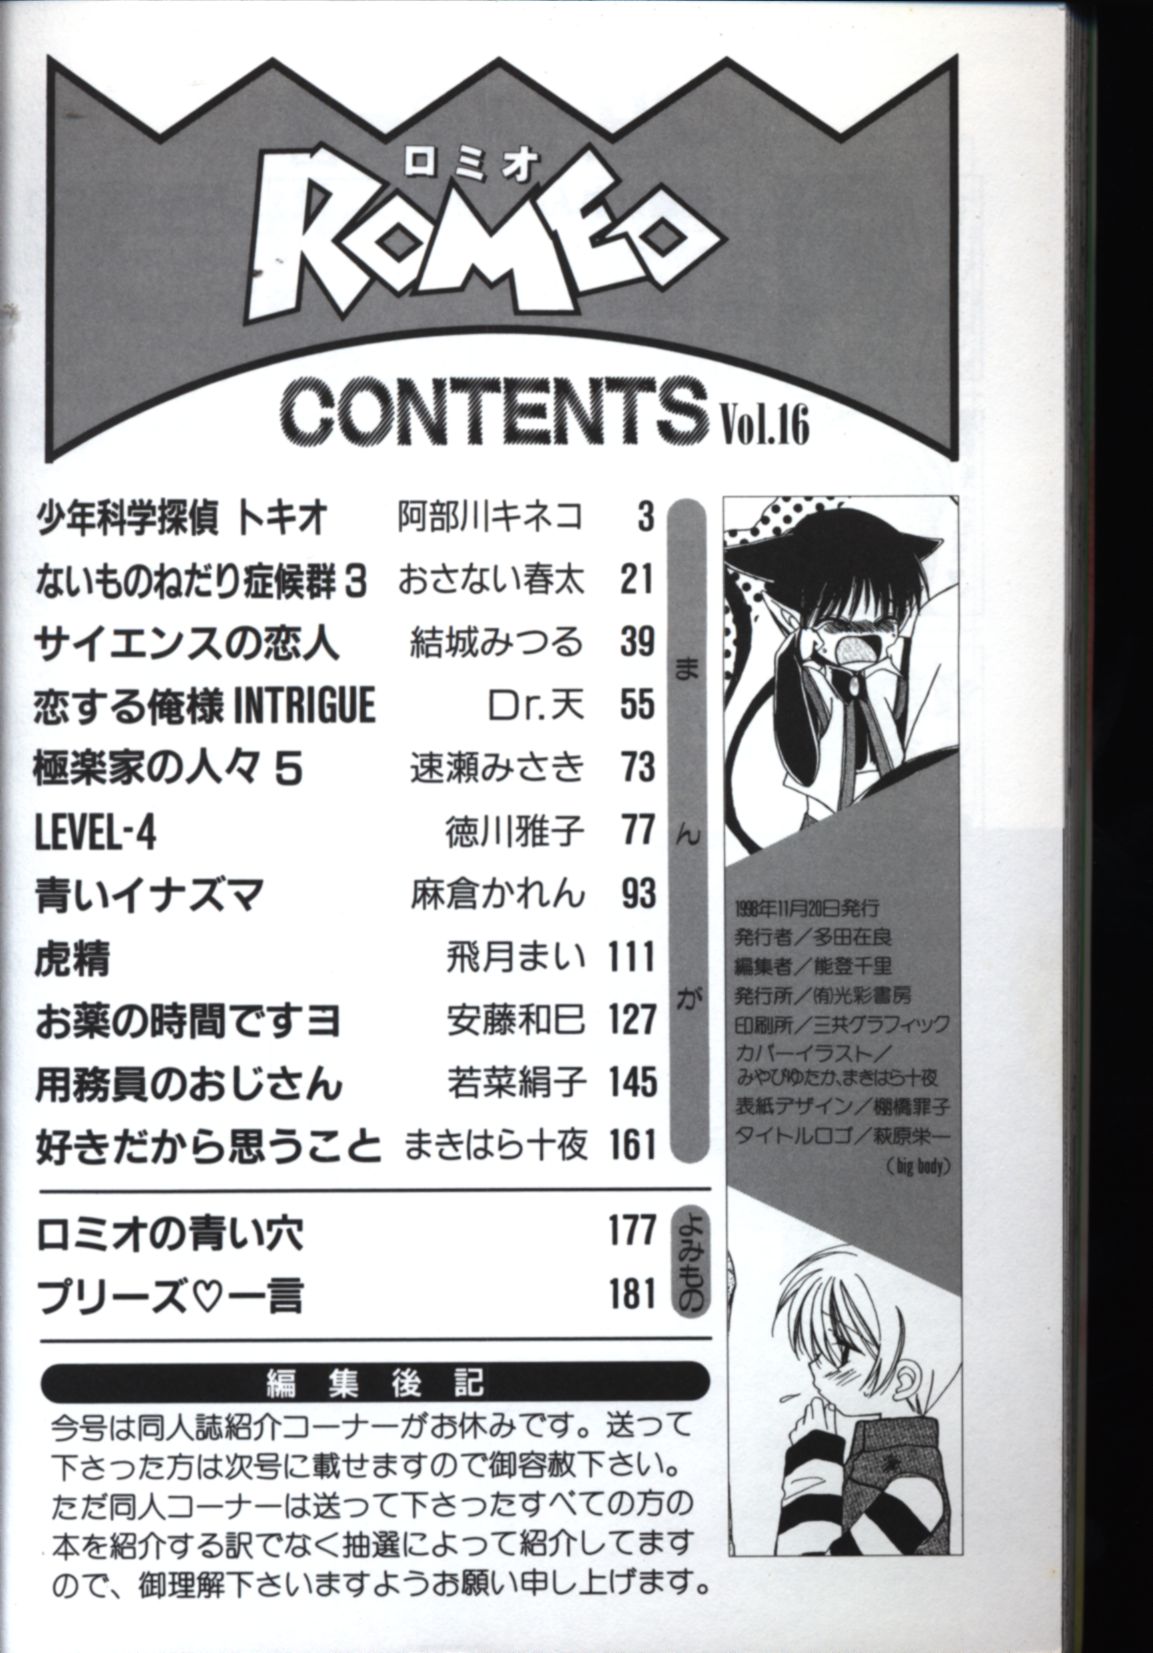 Gallery Koshi Shobo Comic Anthology Romeo 16 | Mandarake Online Shop